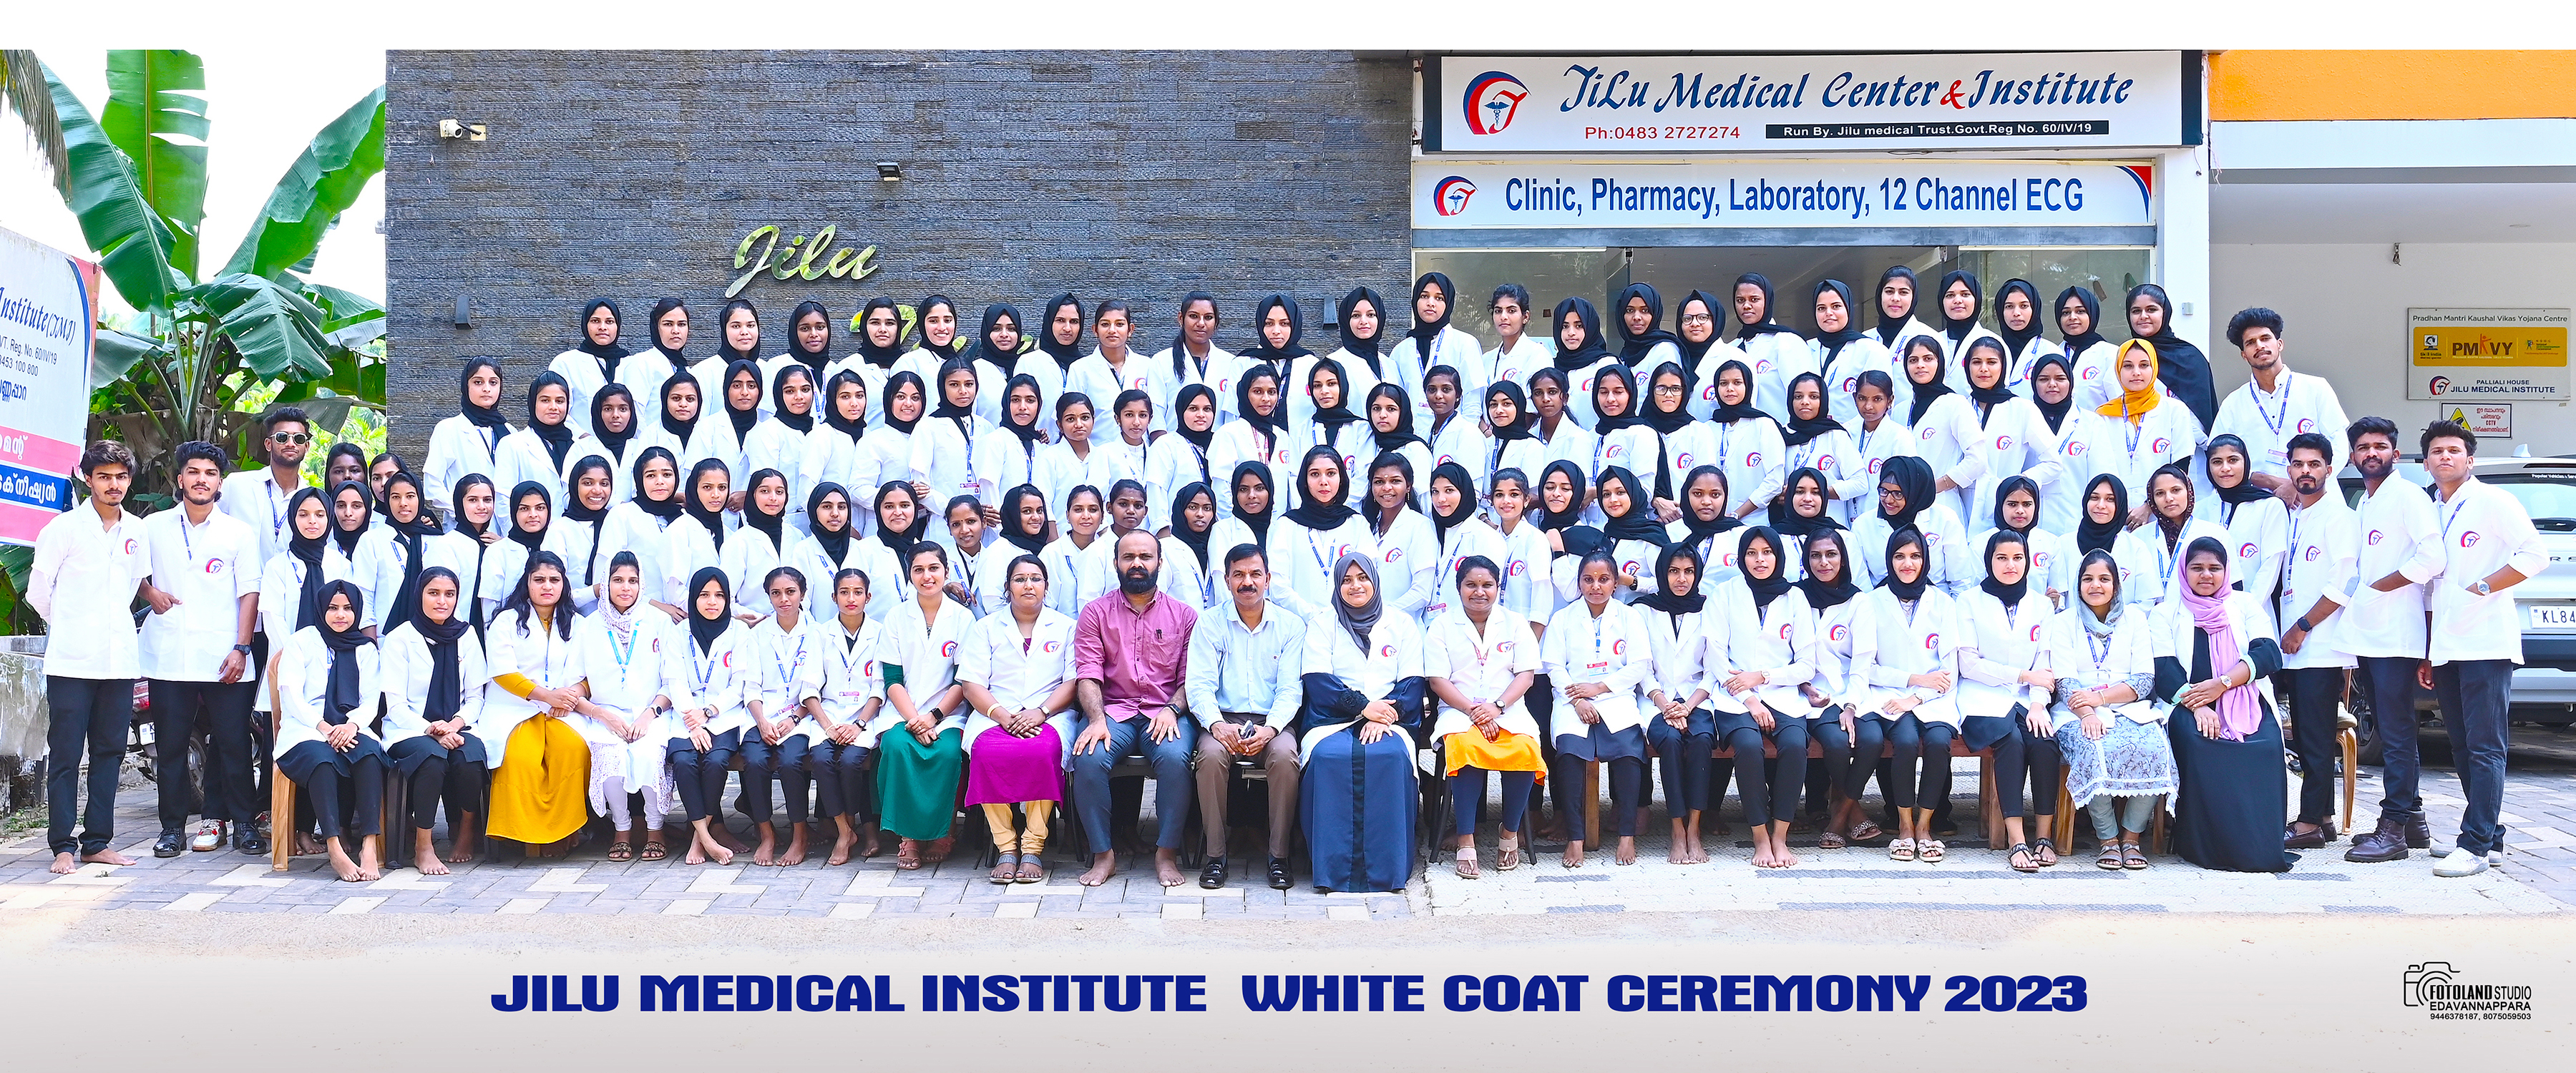 jilu medical institute images